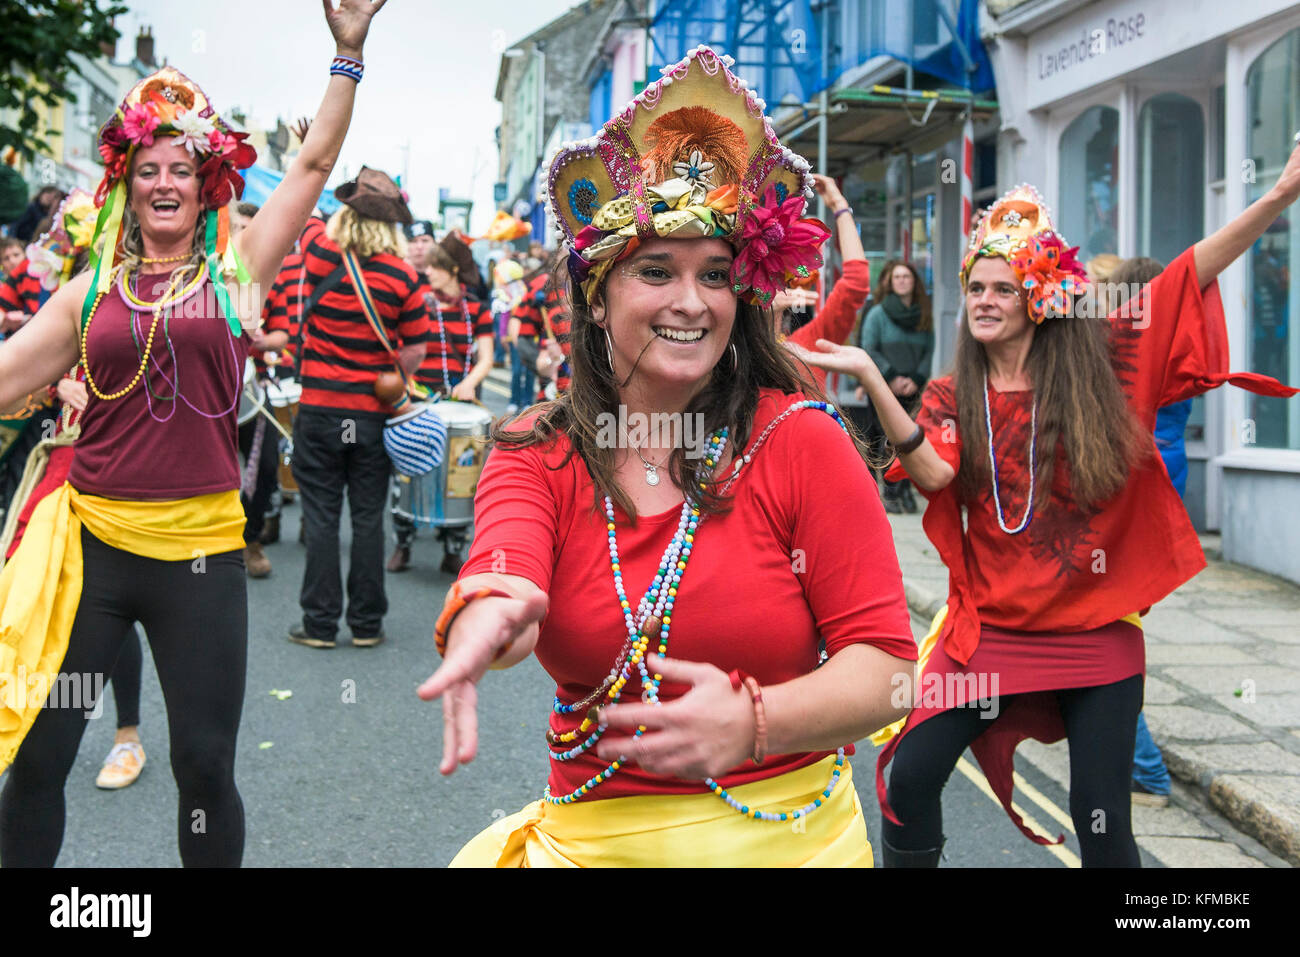 Penryn Kemeneth a two day heritage festival at Penryn Cornwall - Samba ...